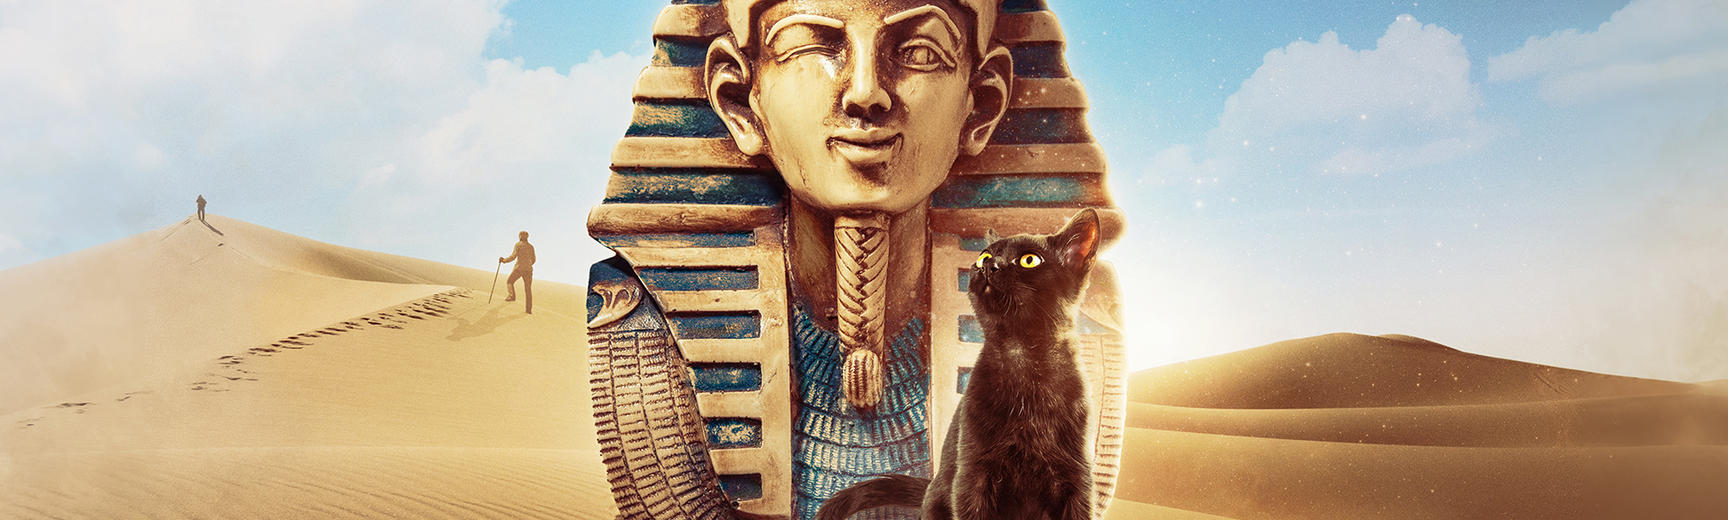 Tutankhamun opera for families poster